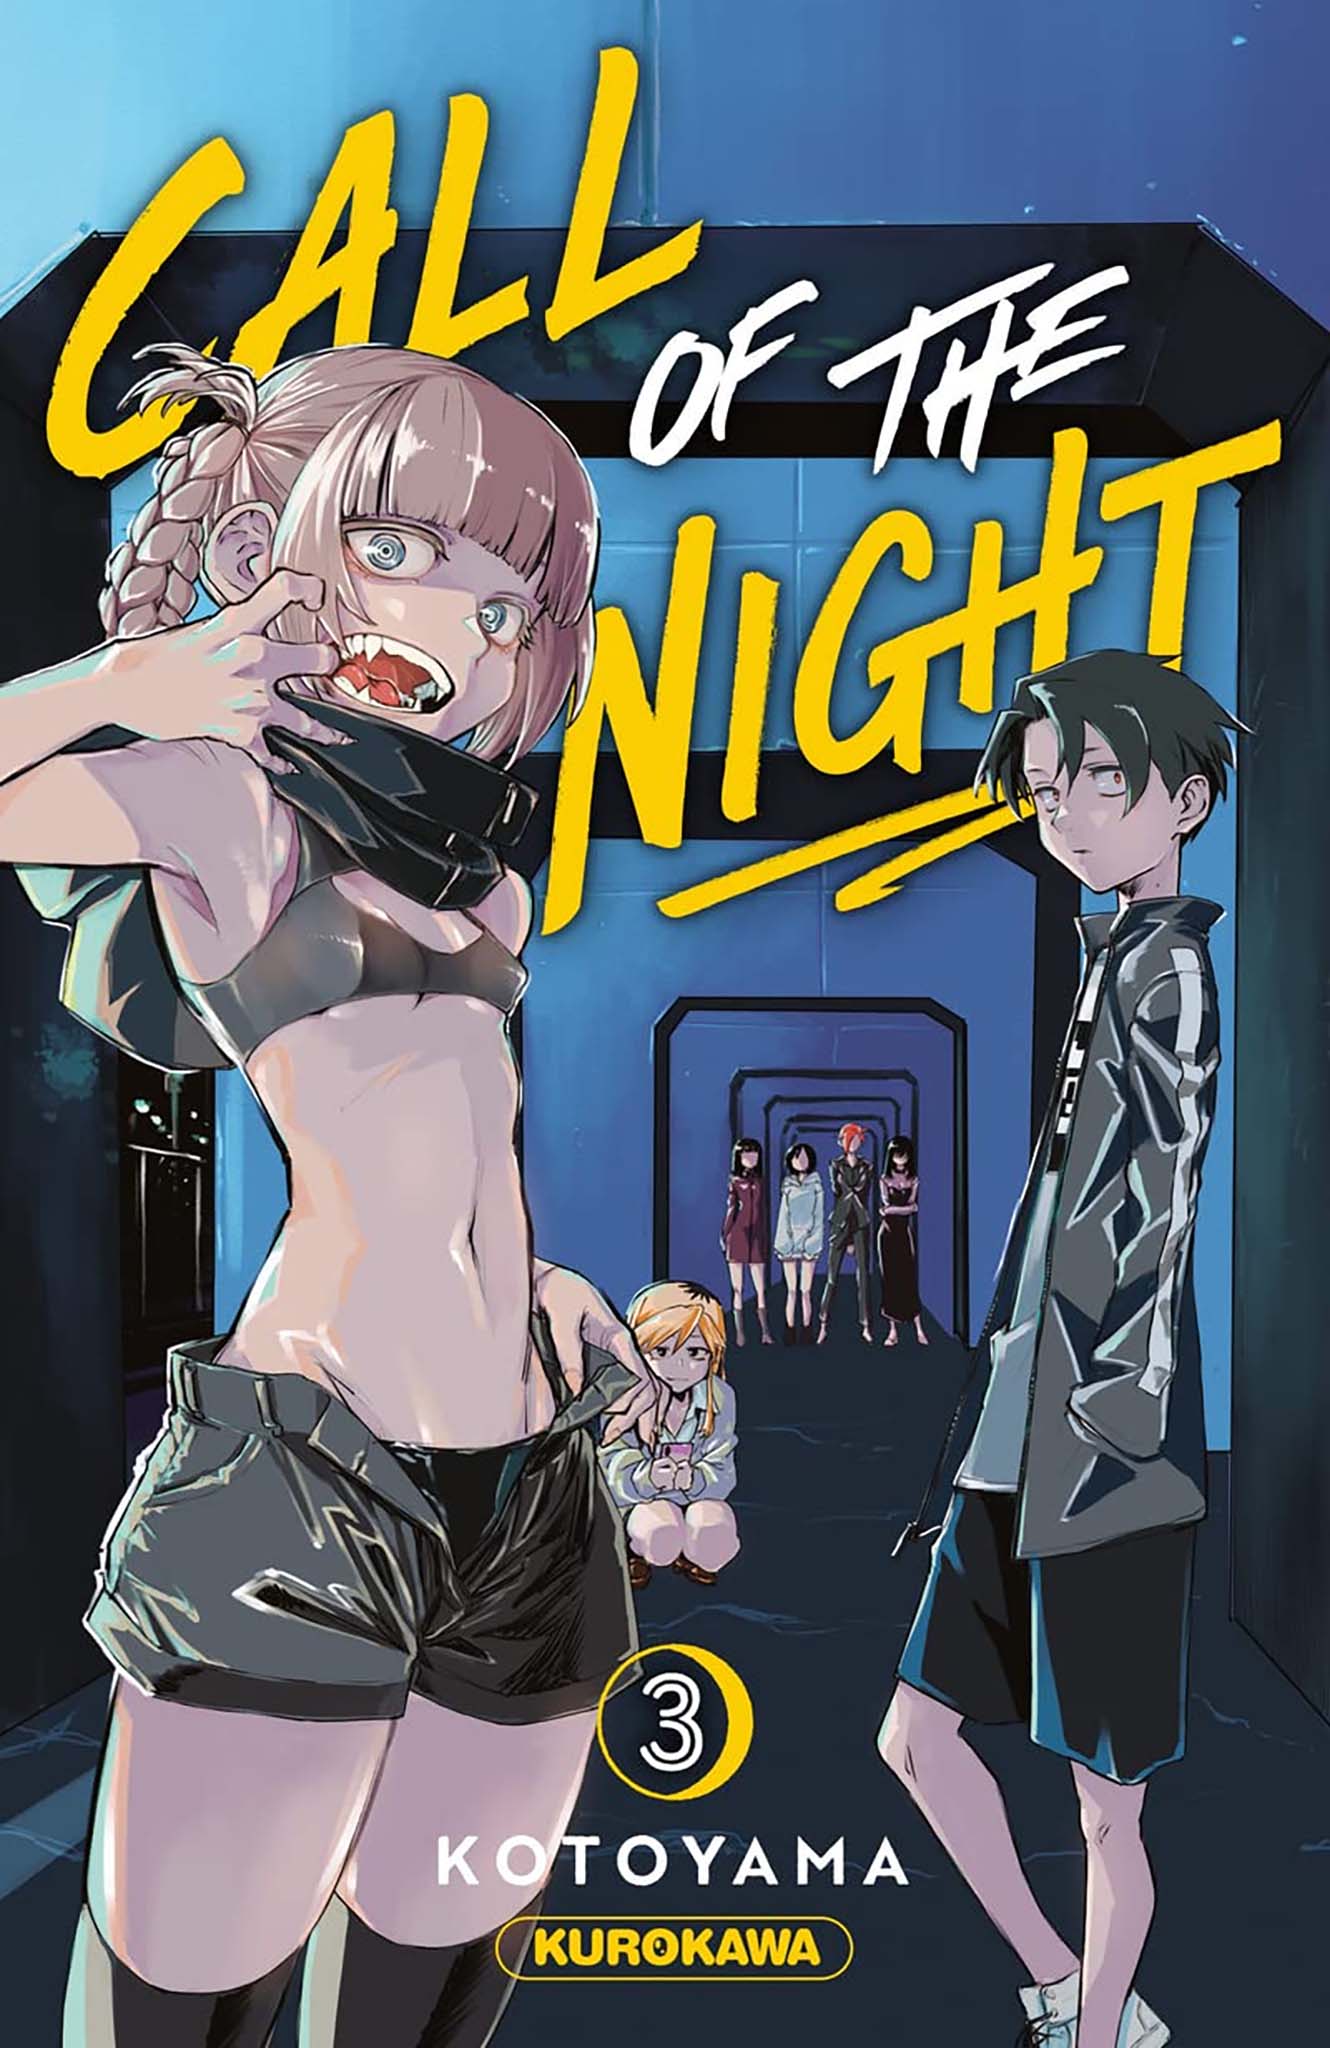 Tome 3 du manga Call of the Night.